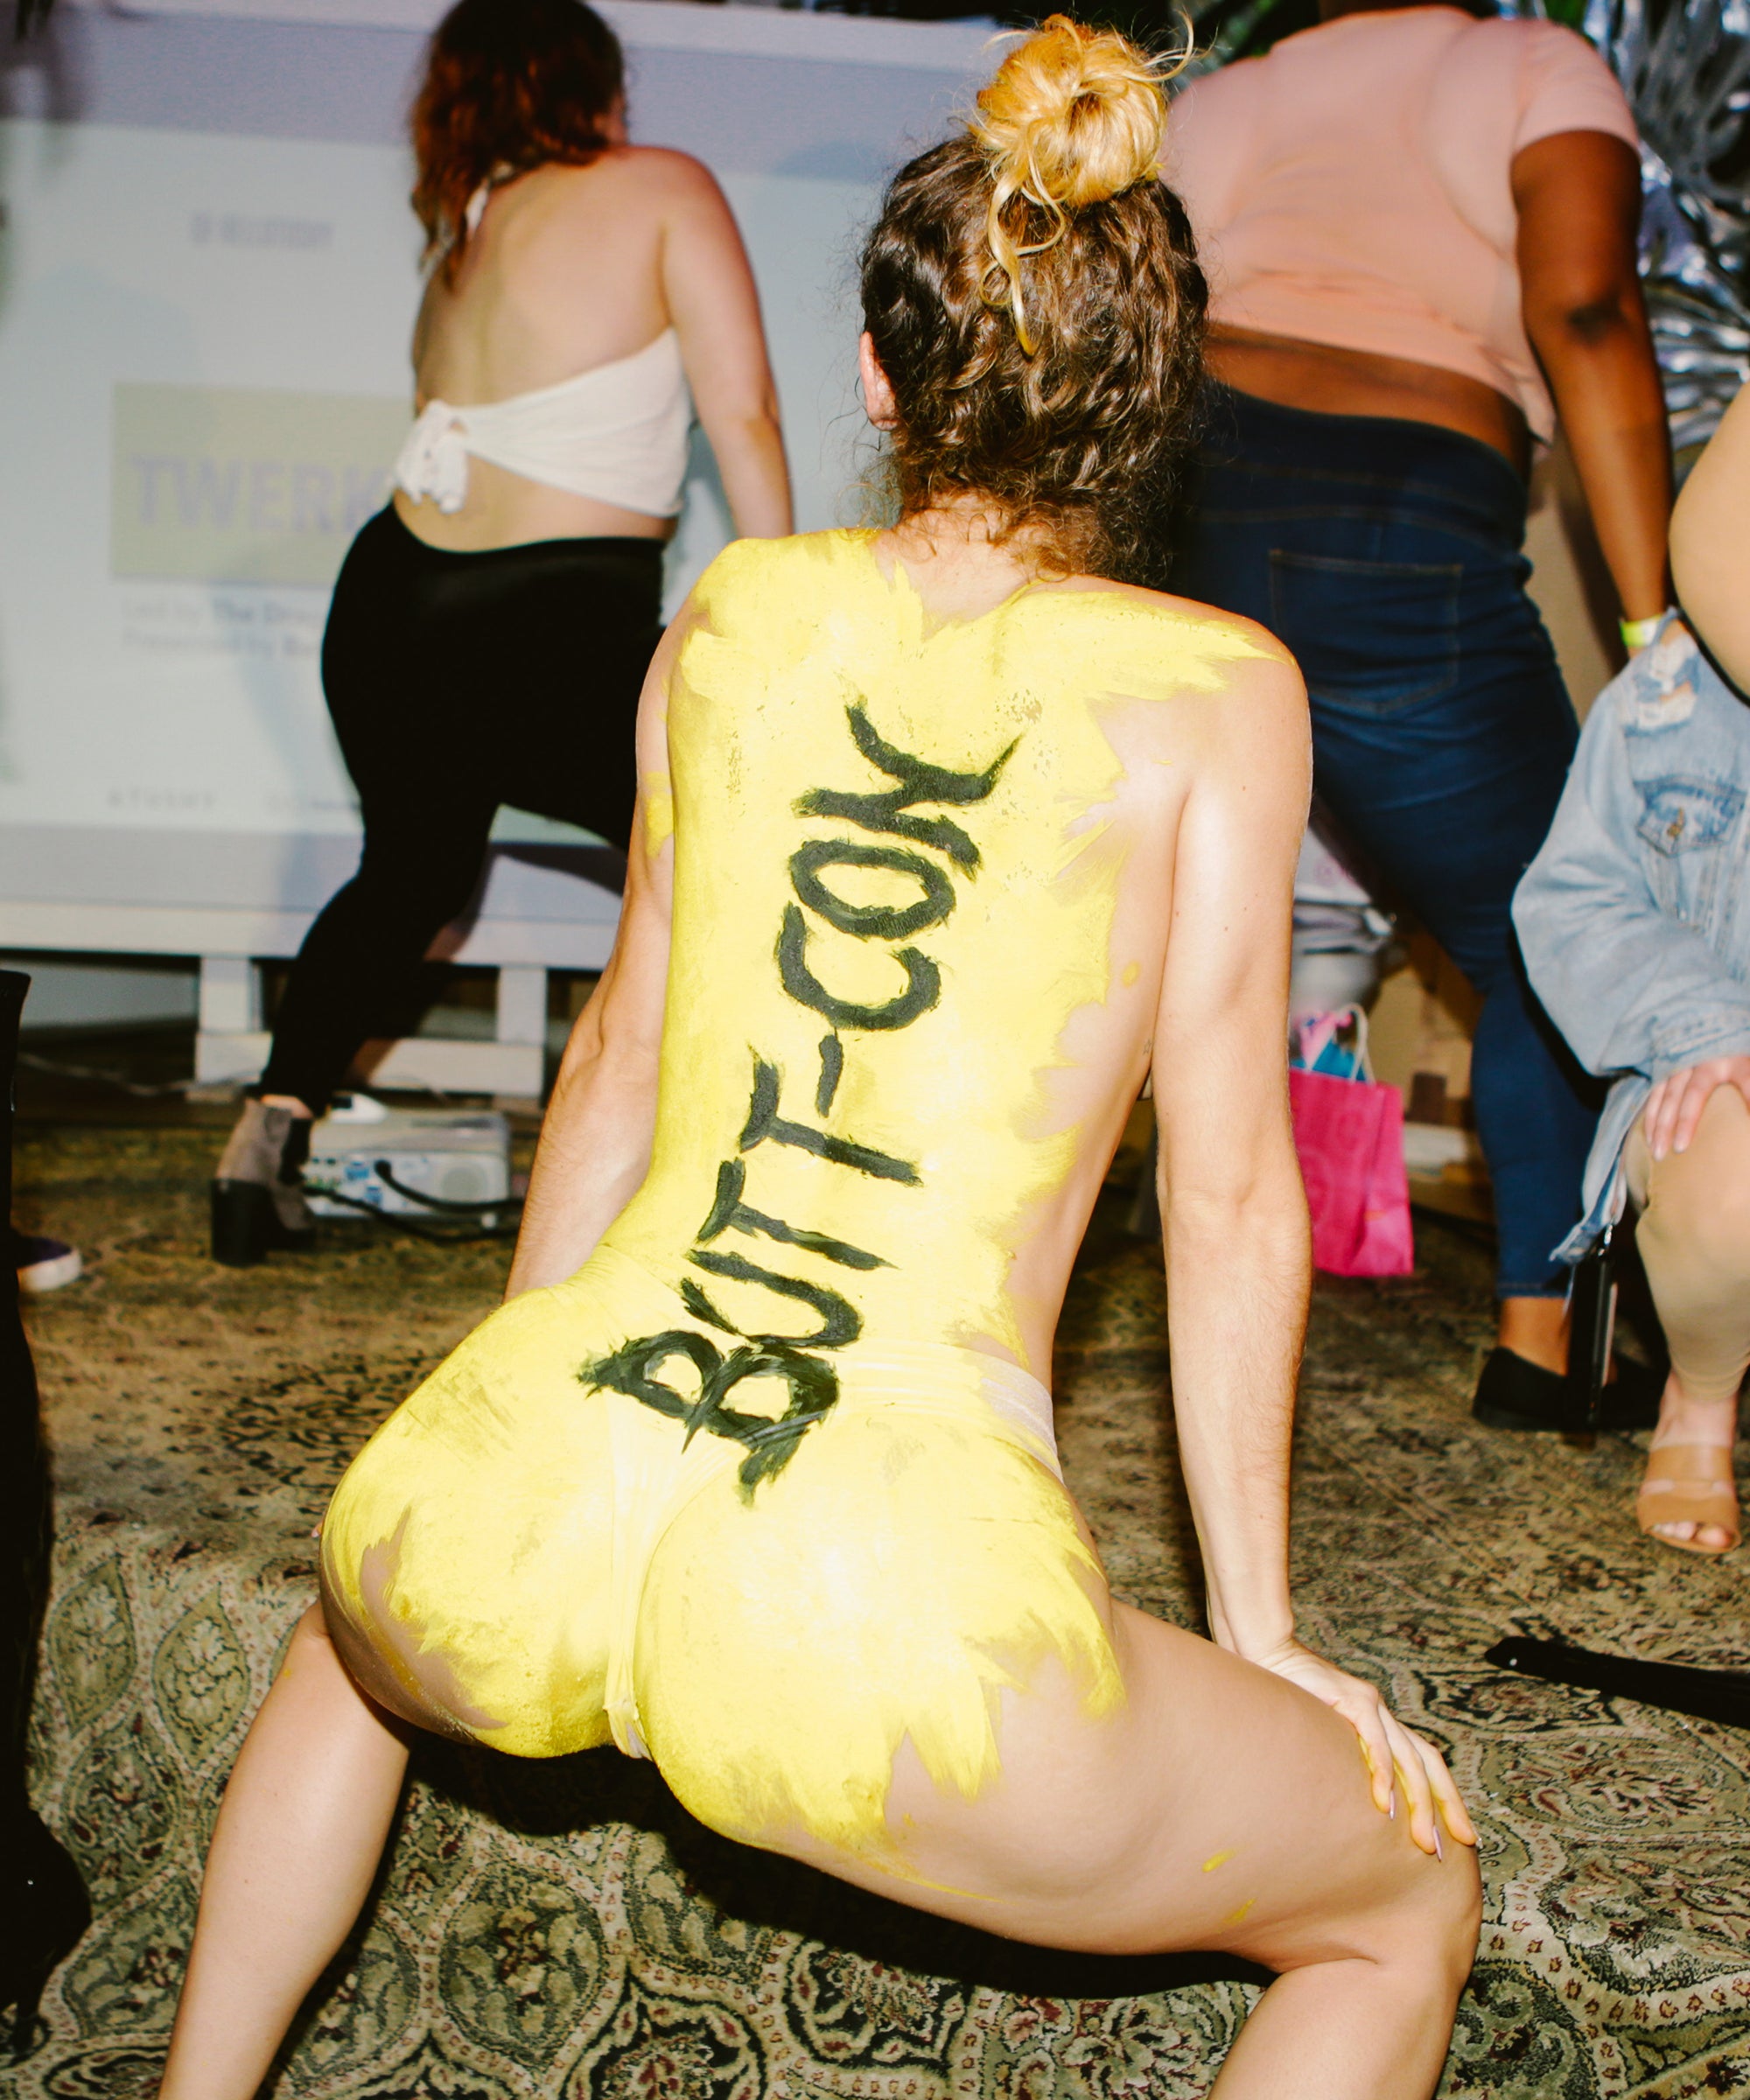 Tushy Sex Orgasm - Tushy Bidet Presents Butt-Con Event For Anal Sex & Poop